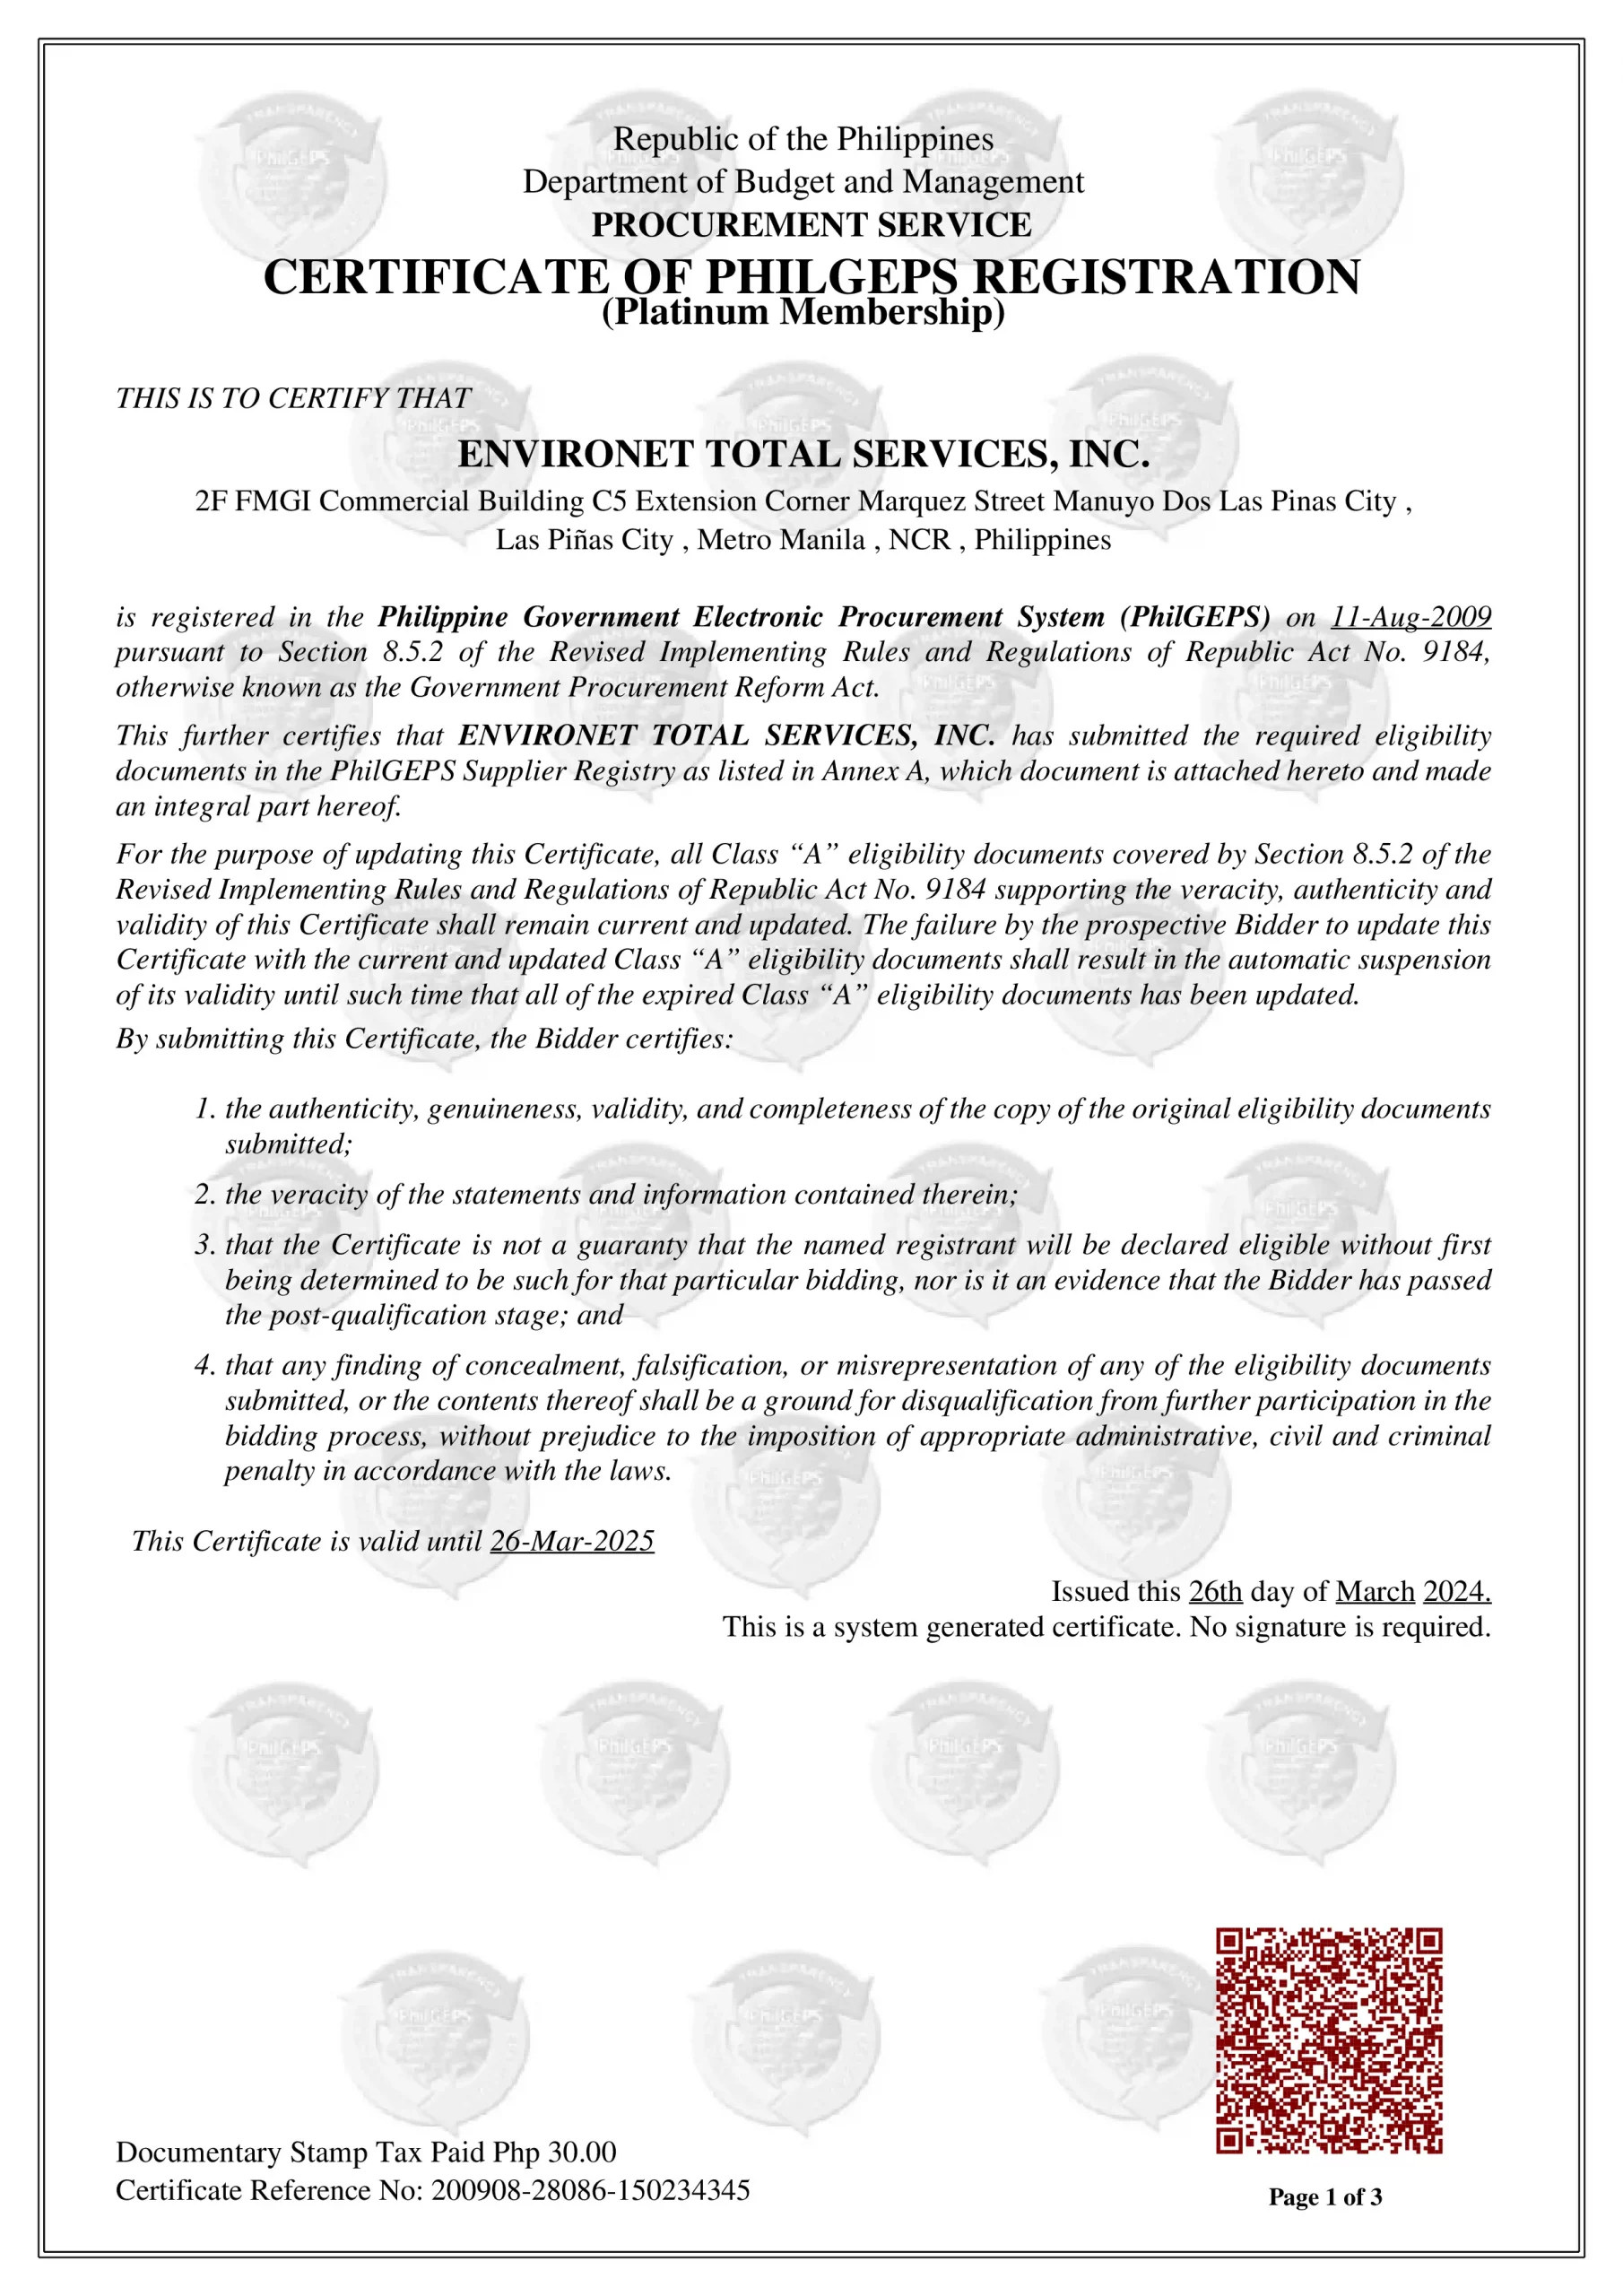 Environet philgeps registration certificate